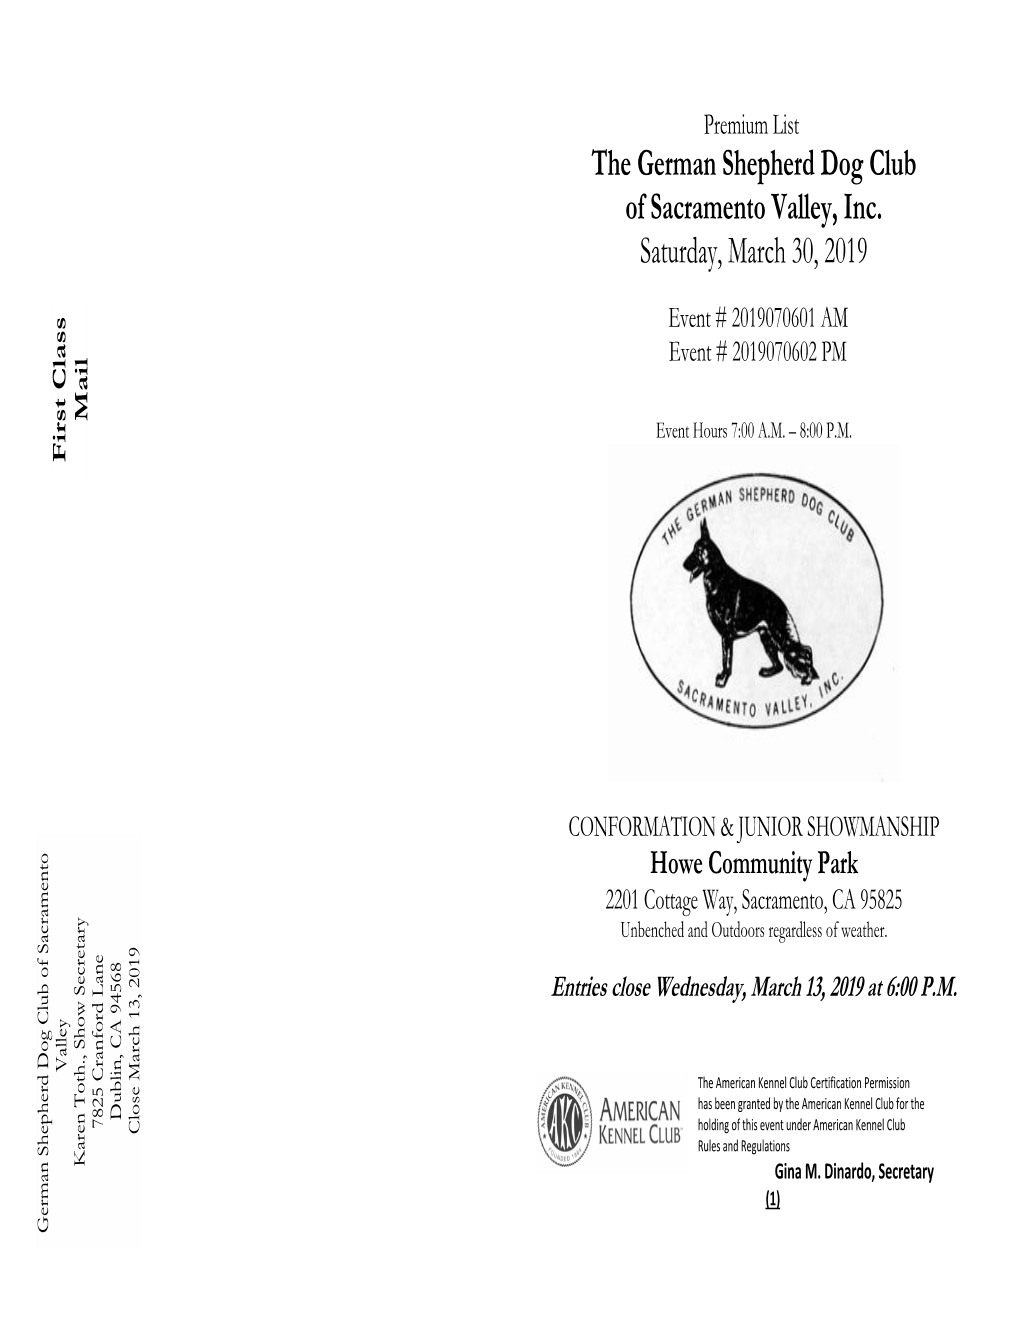 The German Shepherd Dog Club of Sacramento Valley, Inc. Saturday